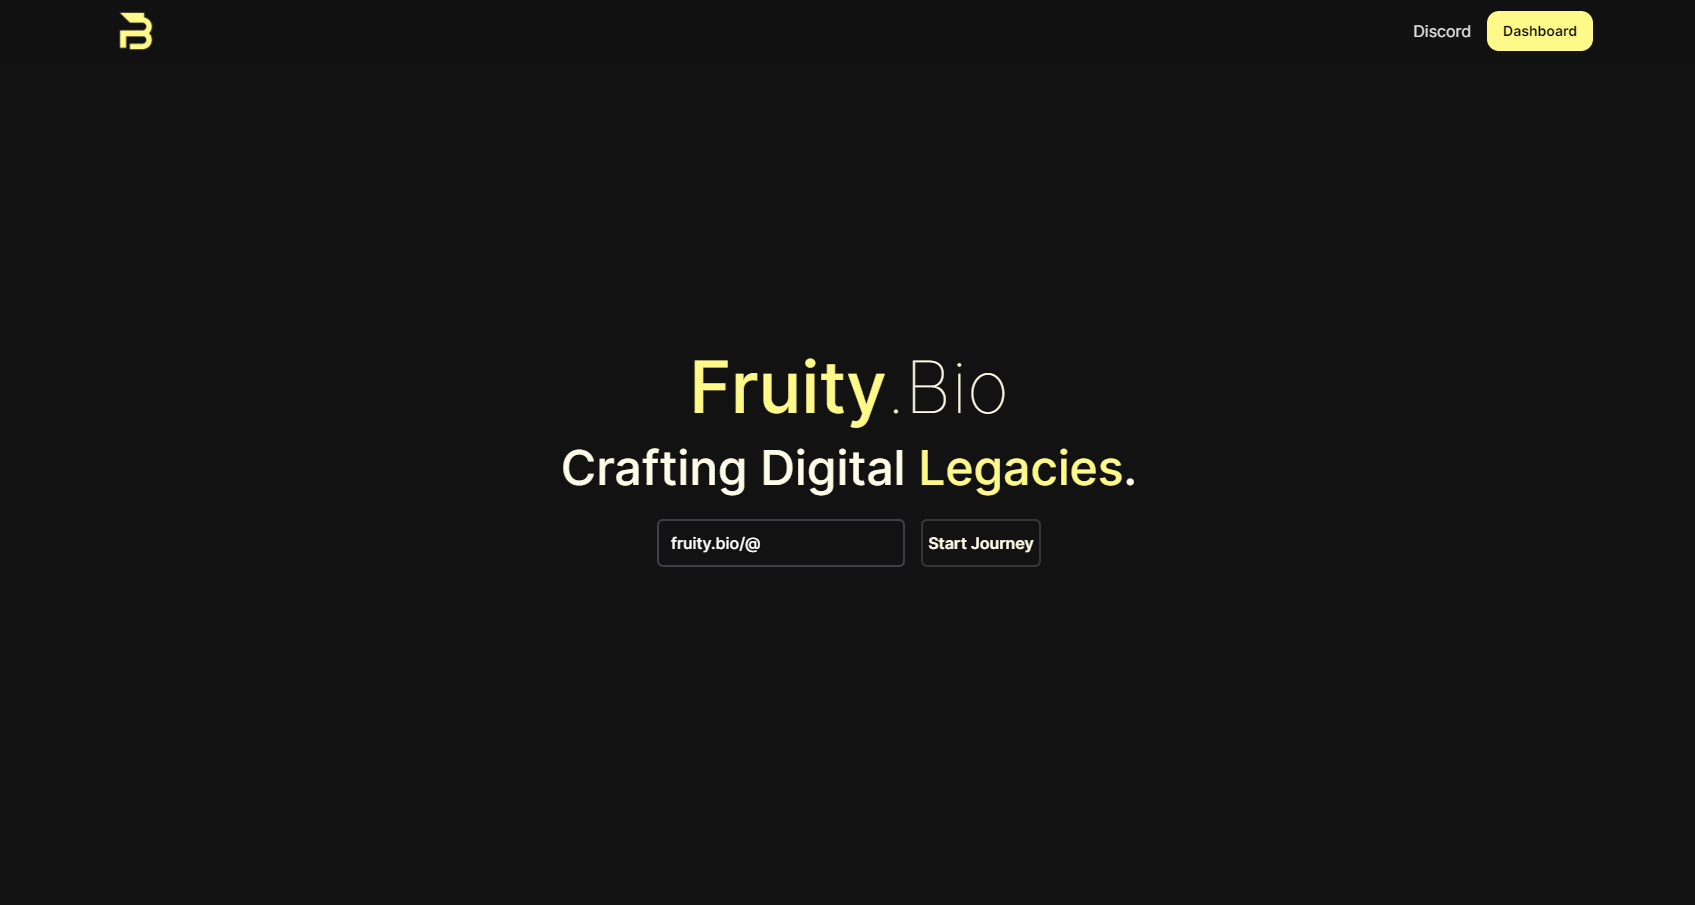 Fruity Bio